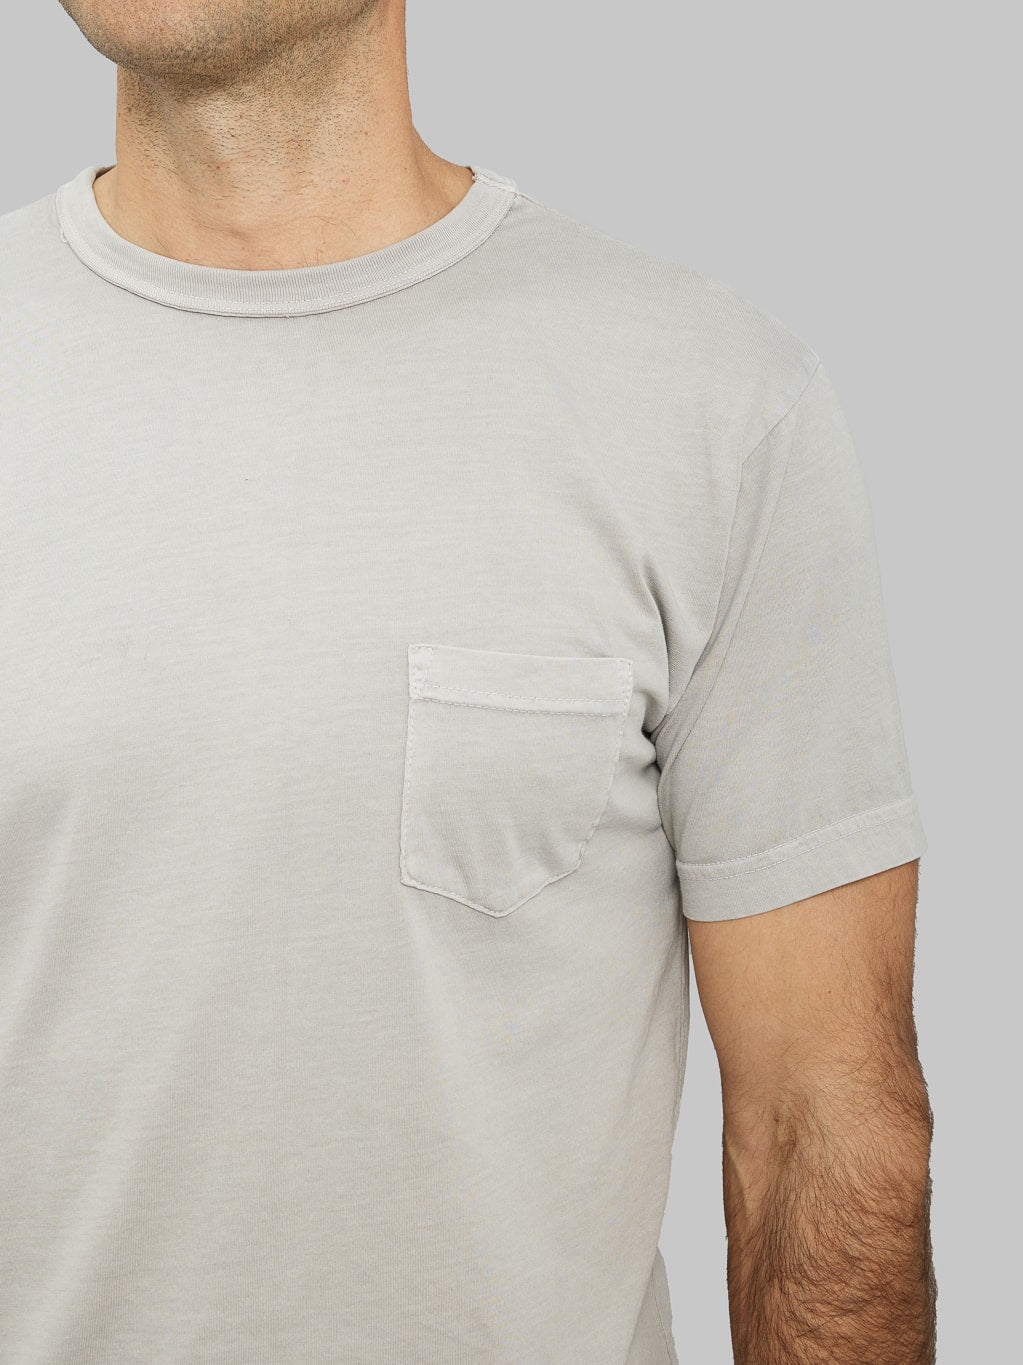 3sixteen Garment Dyed Pima Pocket Tshirt Ash chest